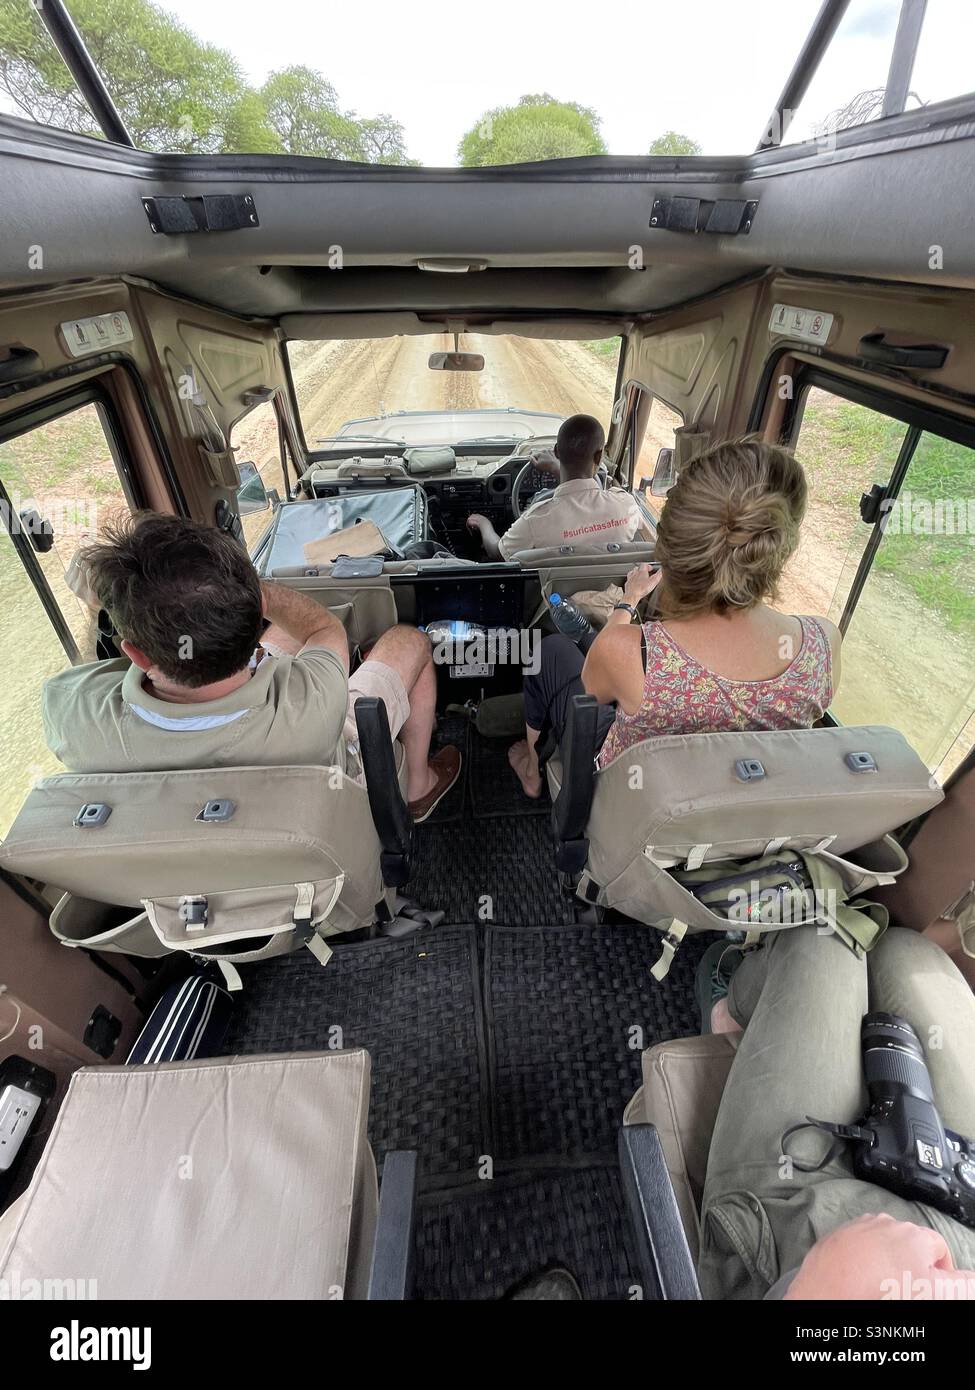 Inside Safari Vehicle, Africa Stock Photo